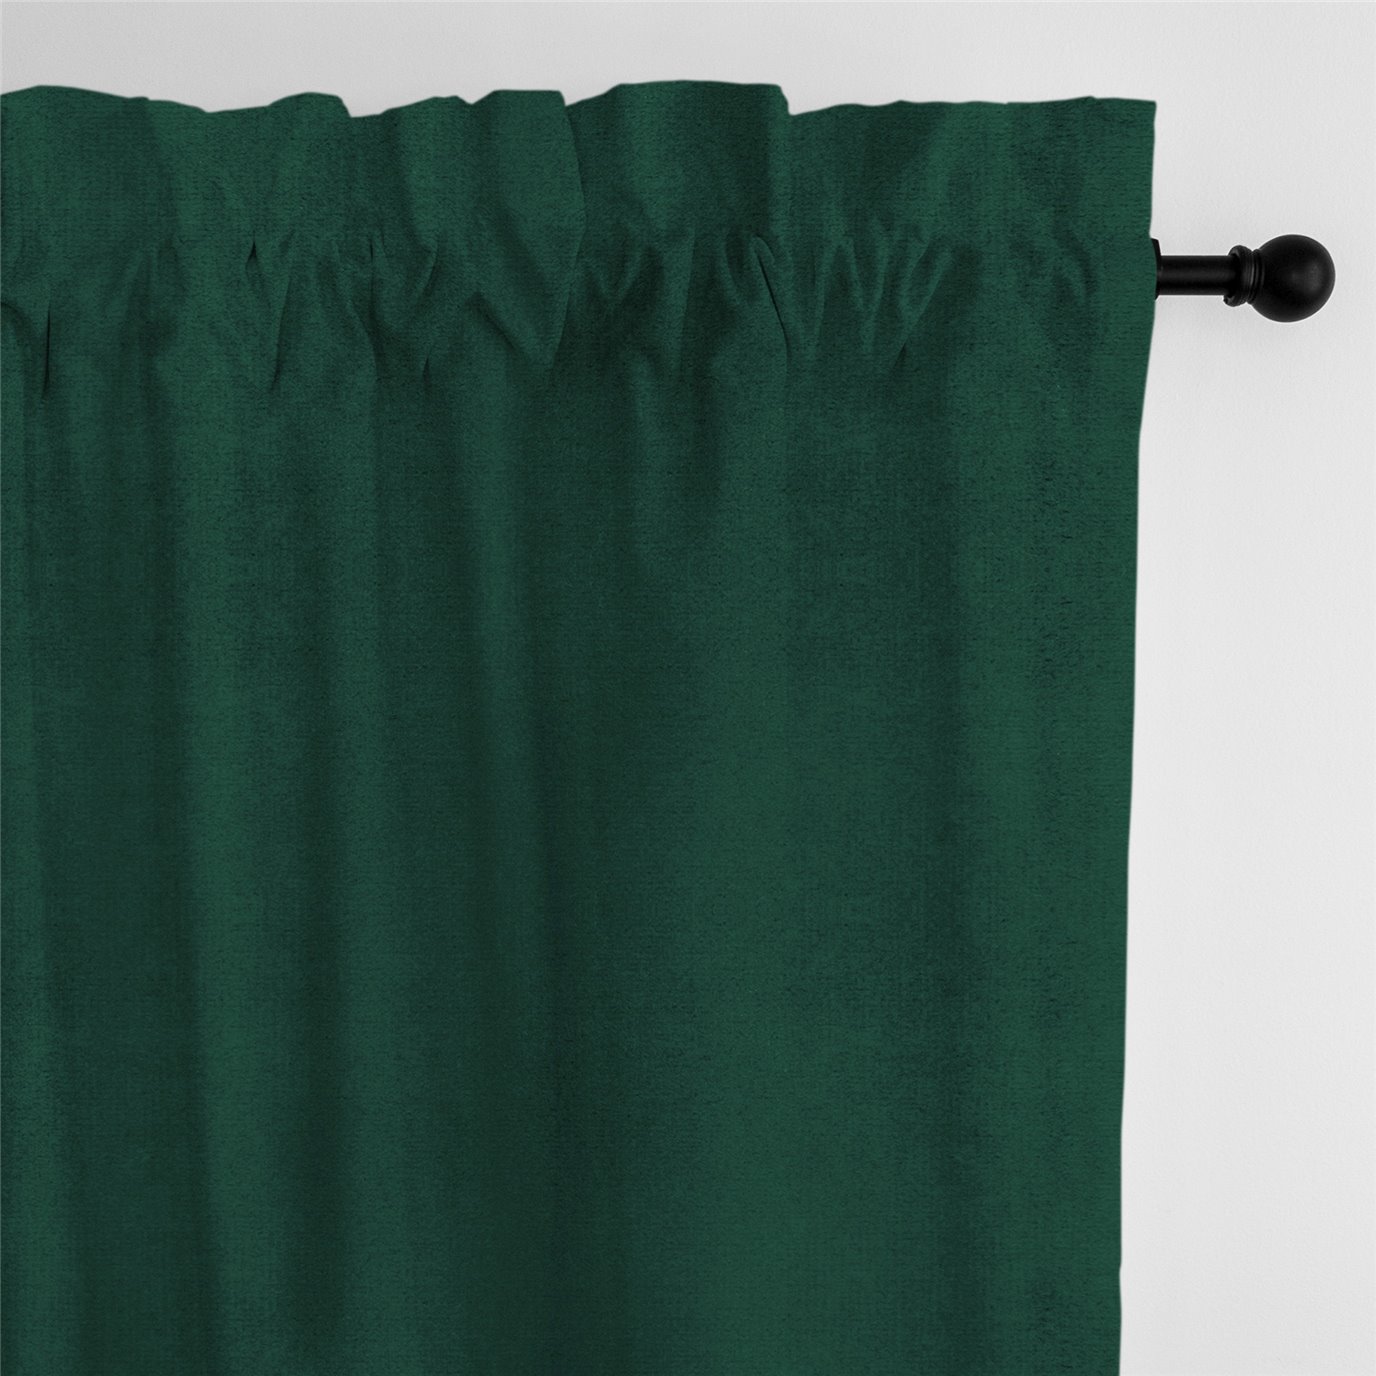 Vanessa Emerald Pole Top Drapery Panel - Pair - Size 50"x120"